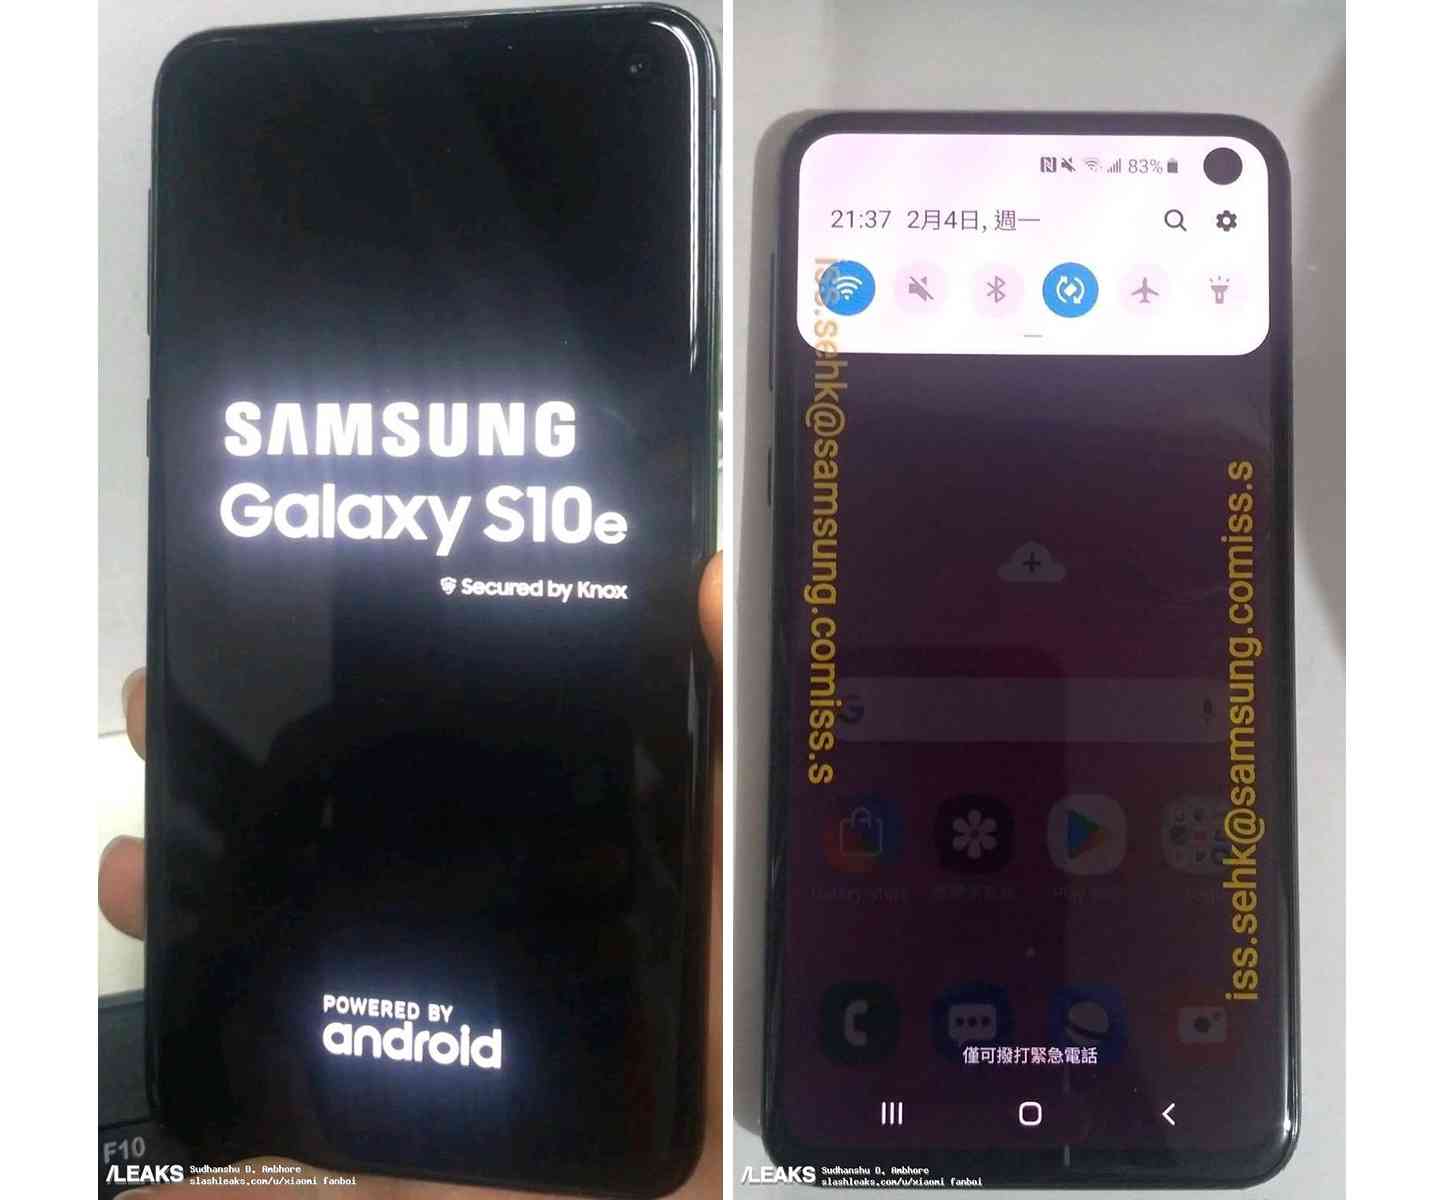 Samsung Galaxy S10e leak